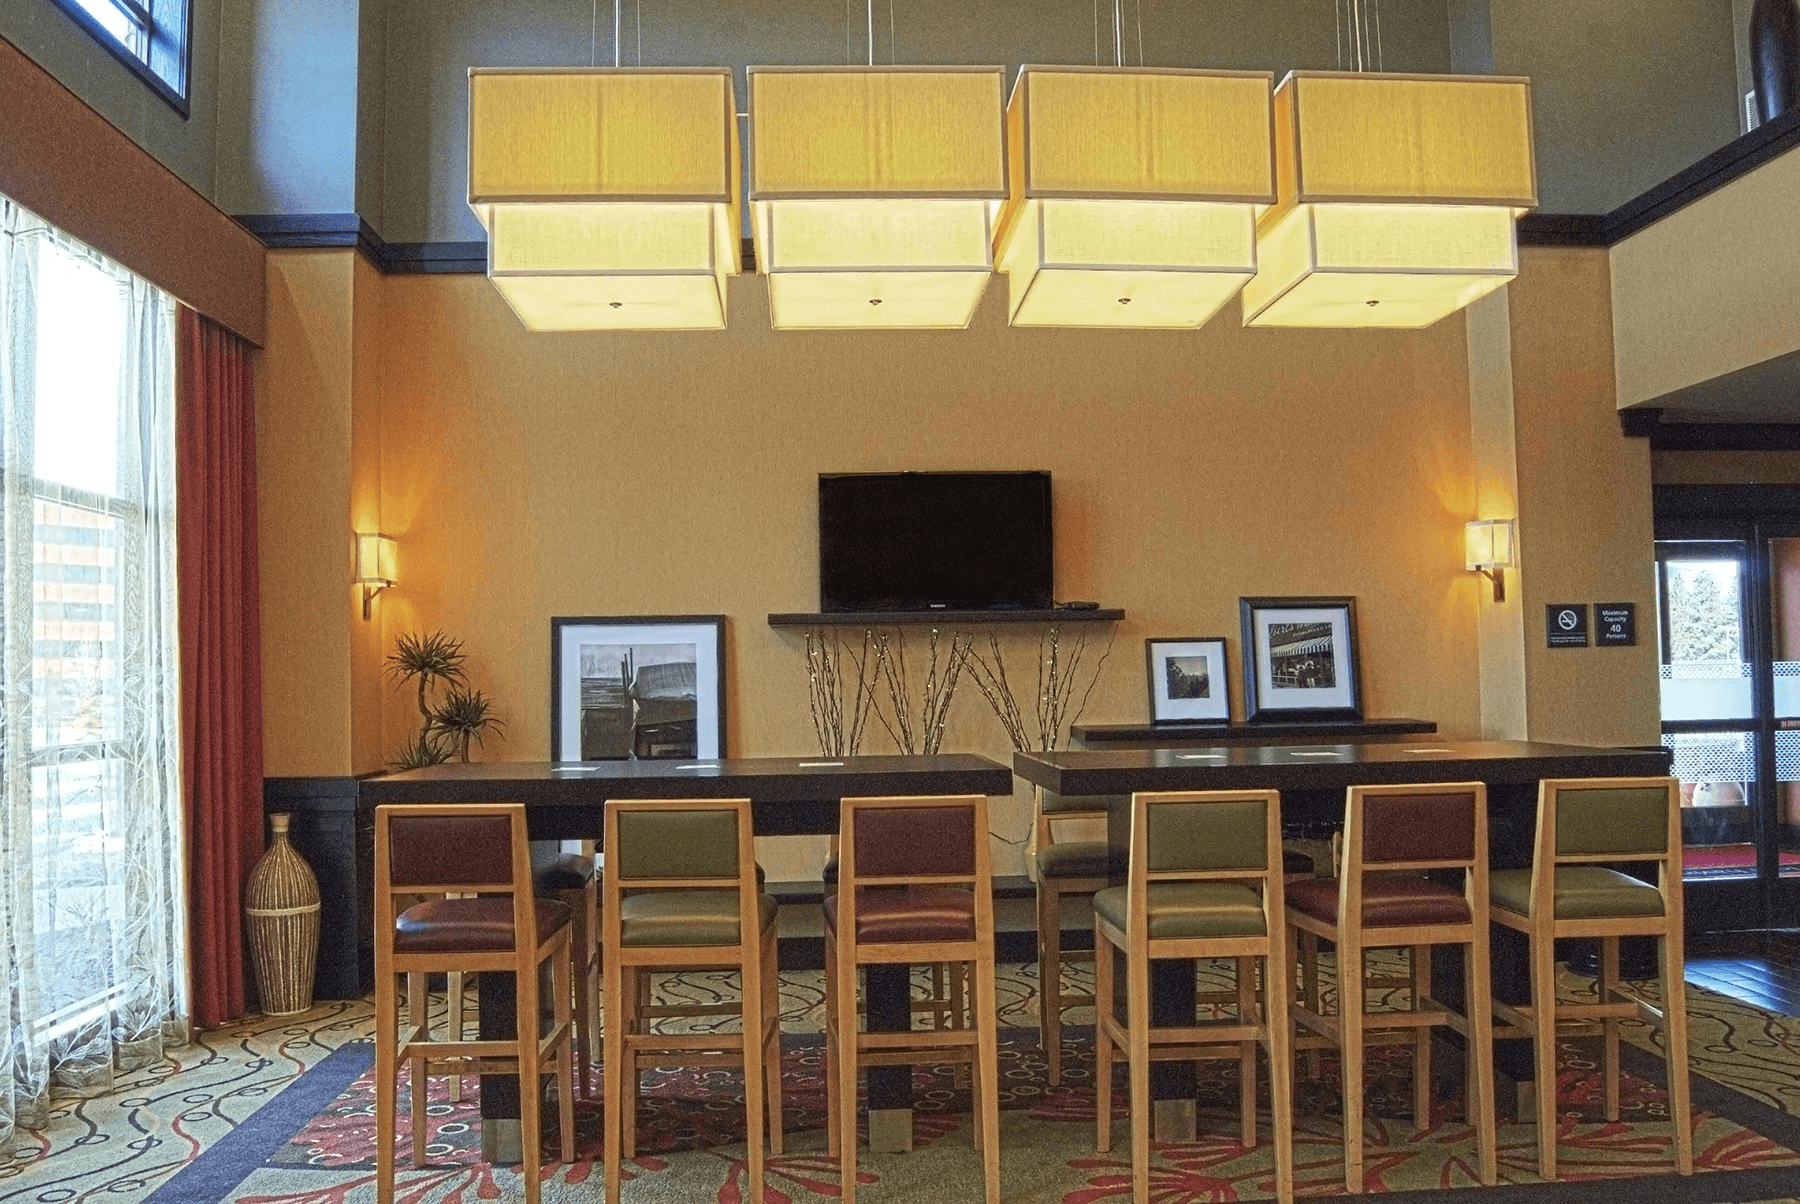  Hampton Inn and Suites Spokane dining room interior 